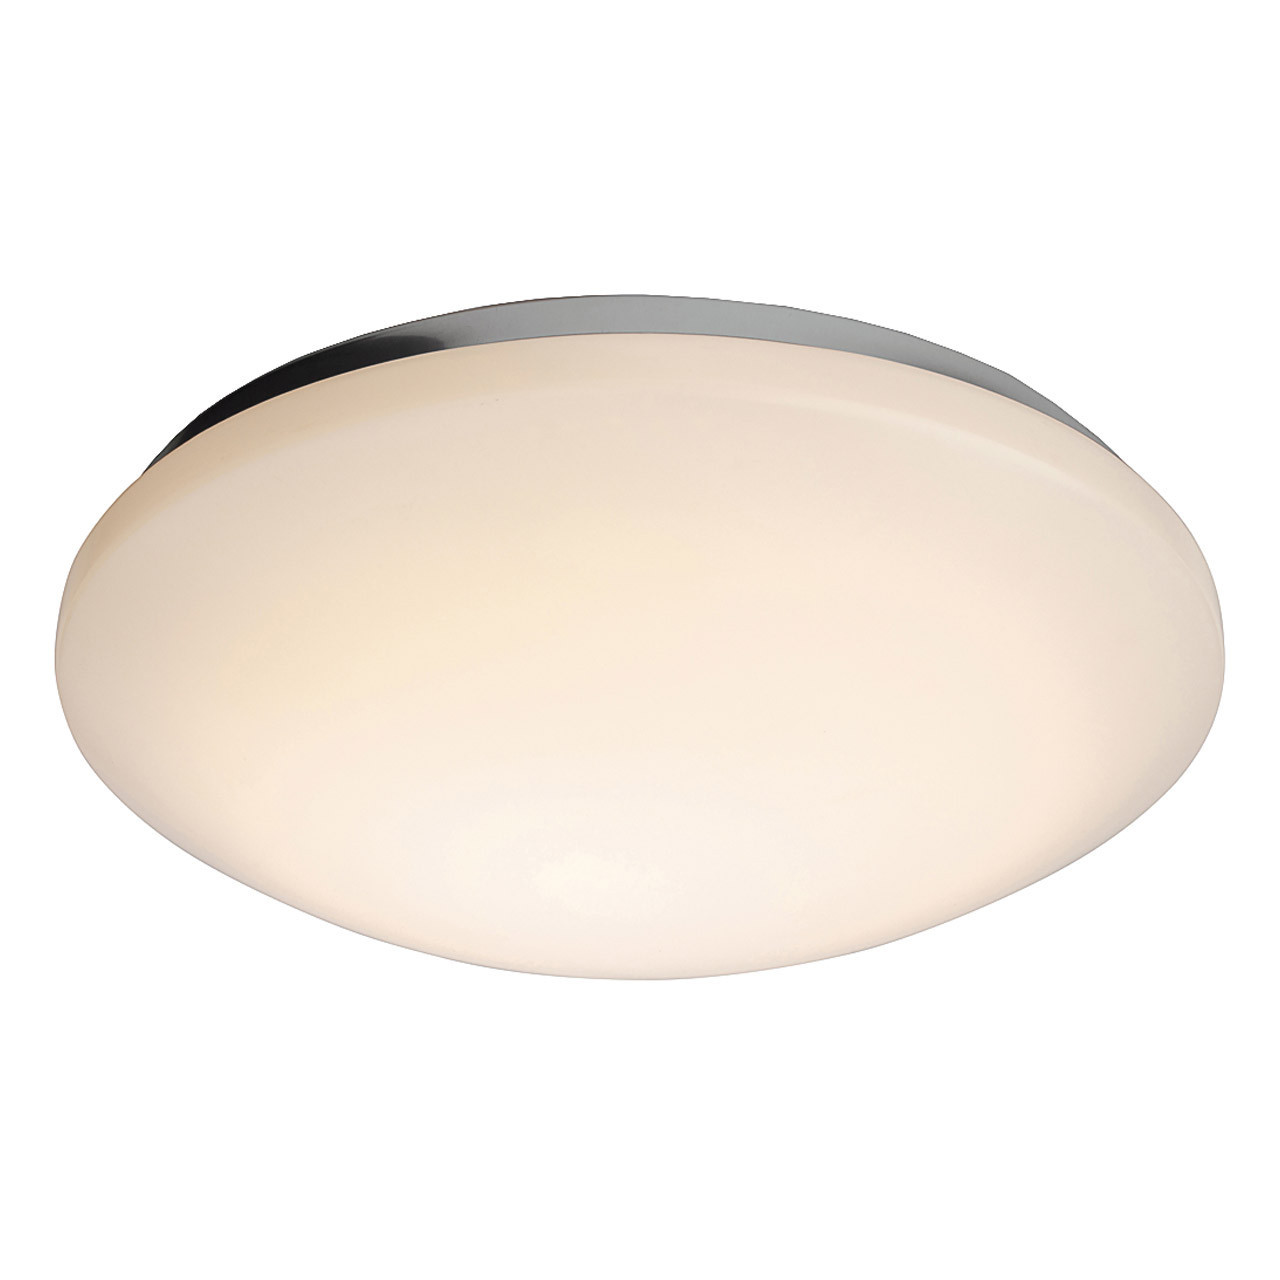 Photos - Chandelier / Lamp FirstLight Siena Modern Style LED 34.5cm Flush Ceiling Light 12W Warm Whit 